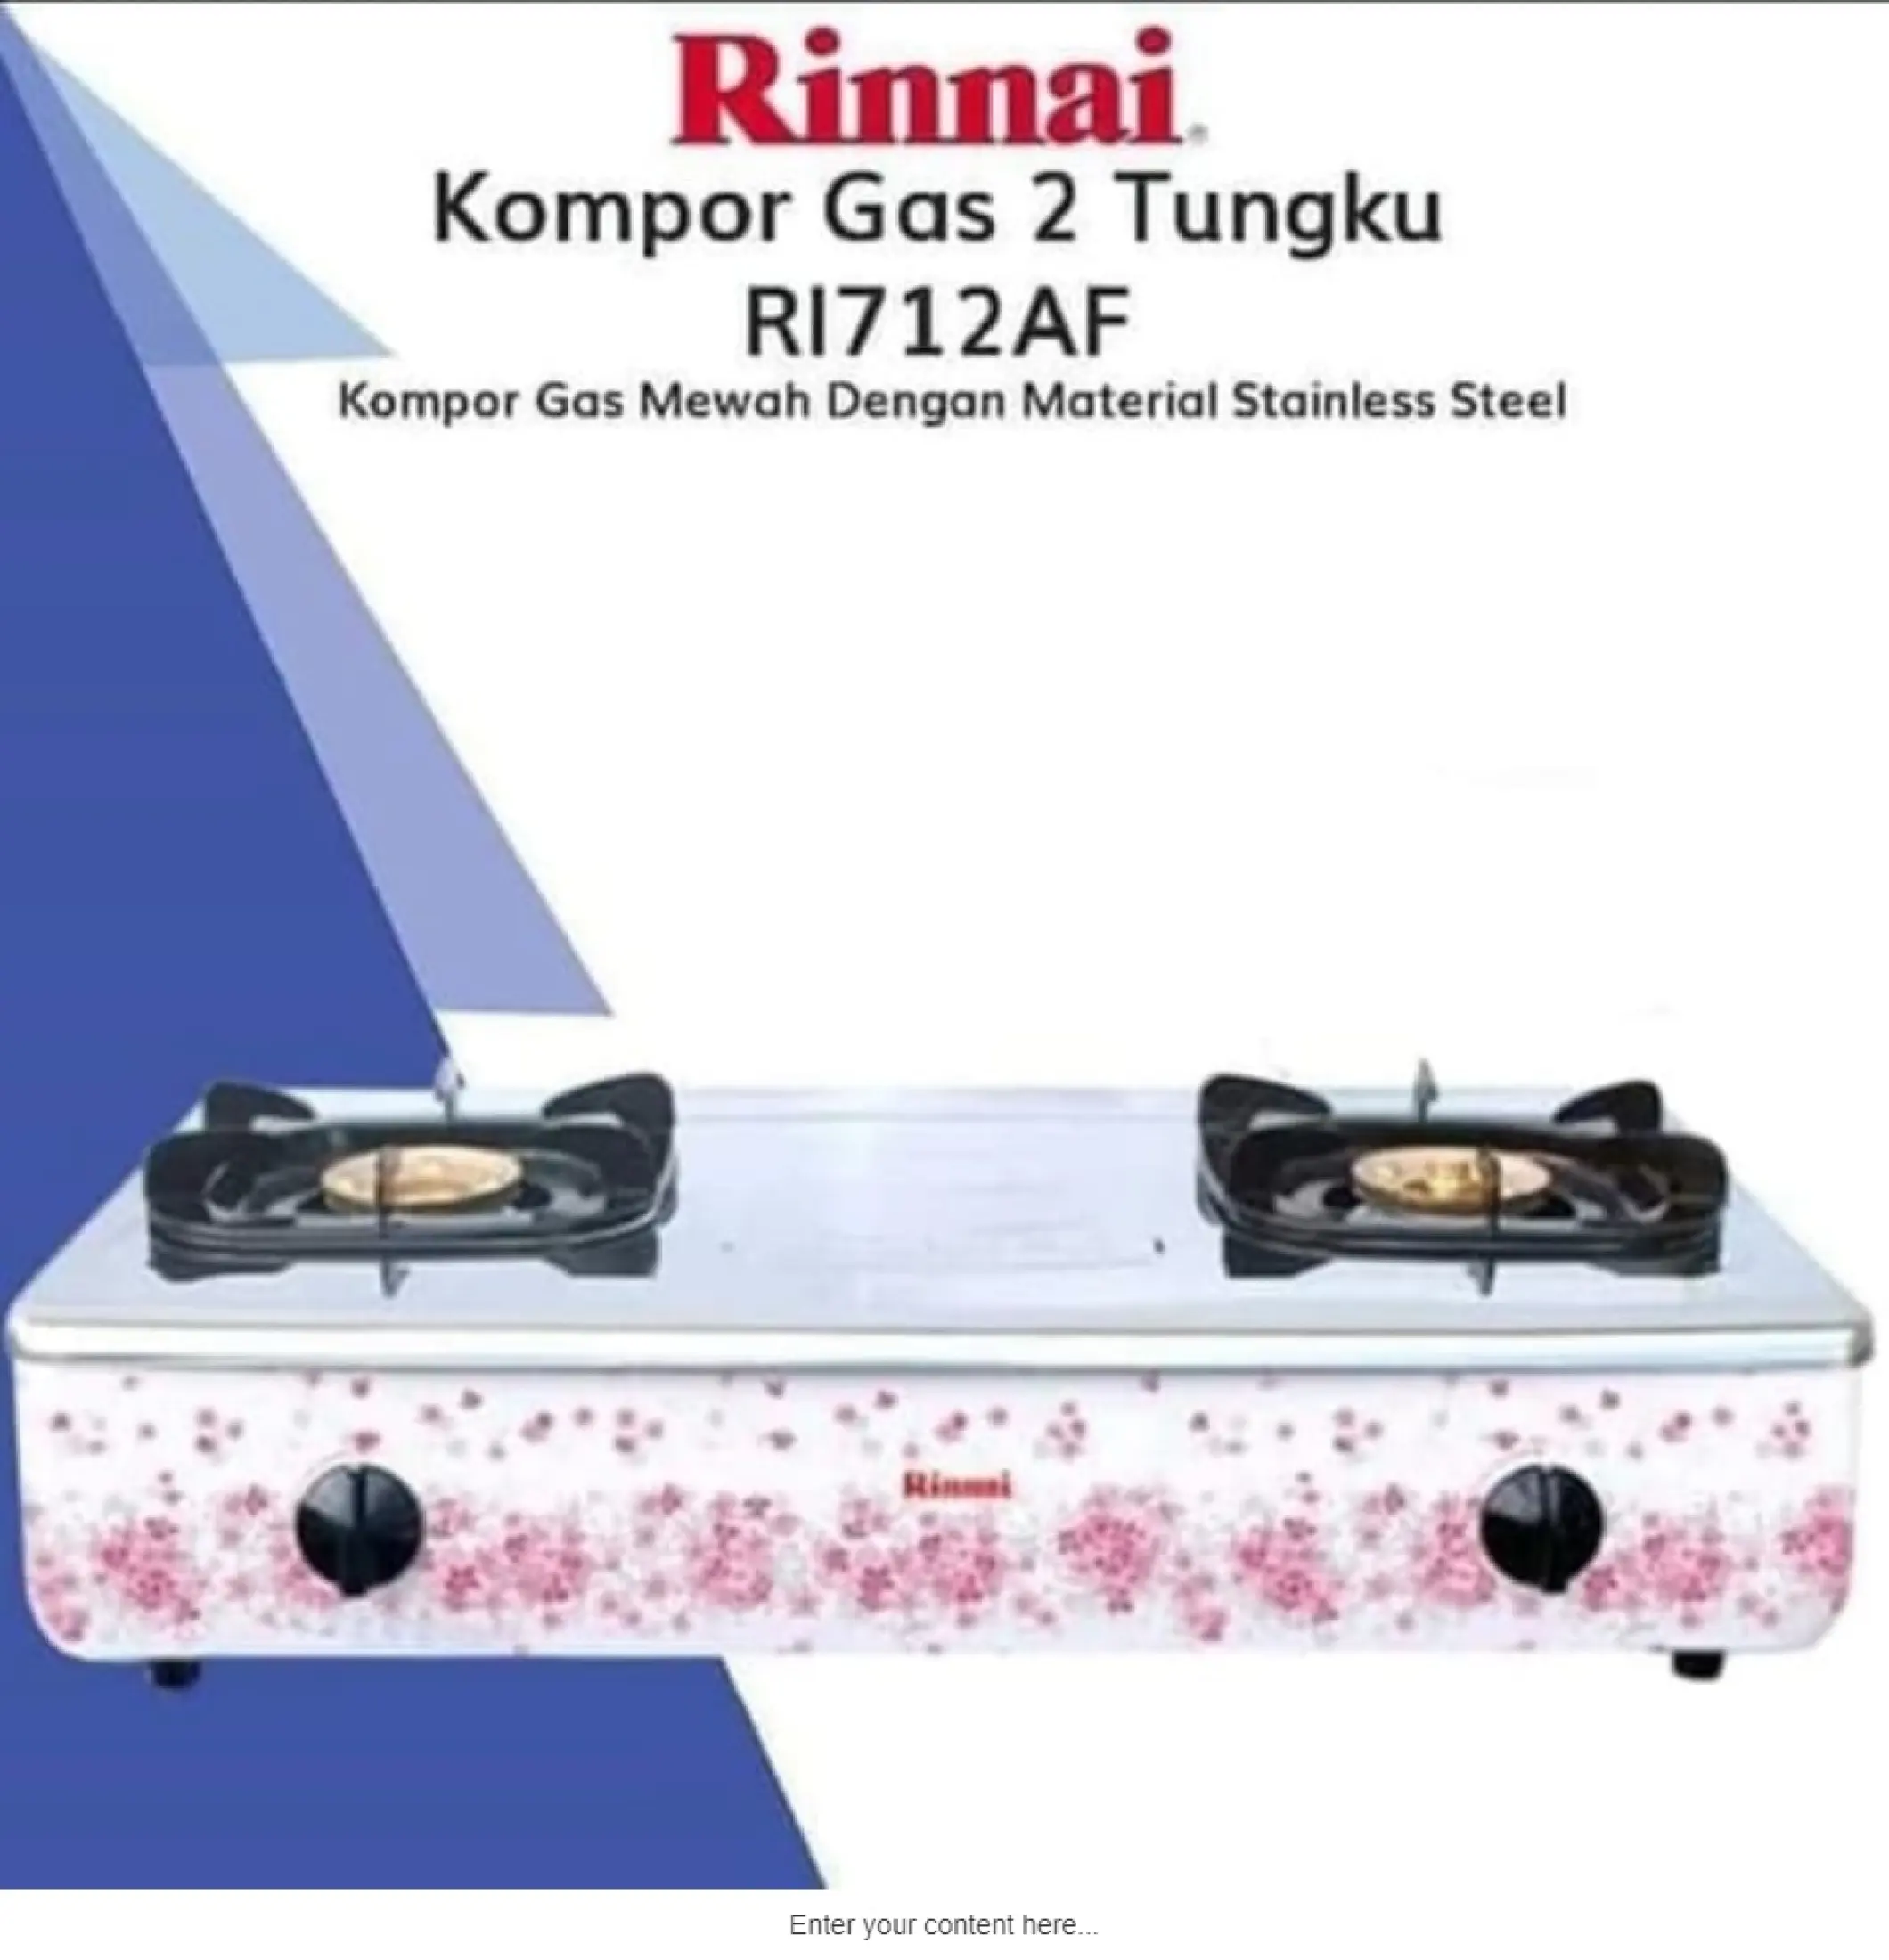 Kompor Gas Rinnai Ri 712af Kompor Gas 2 Tungku Jumbo Stenlies Steel Motif Bunga Lazada Indonesia